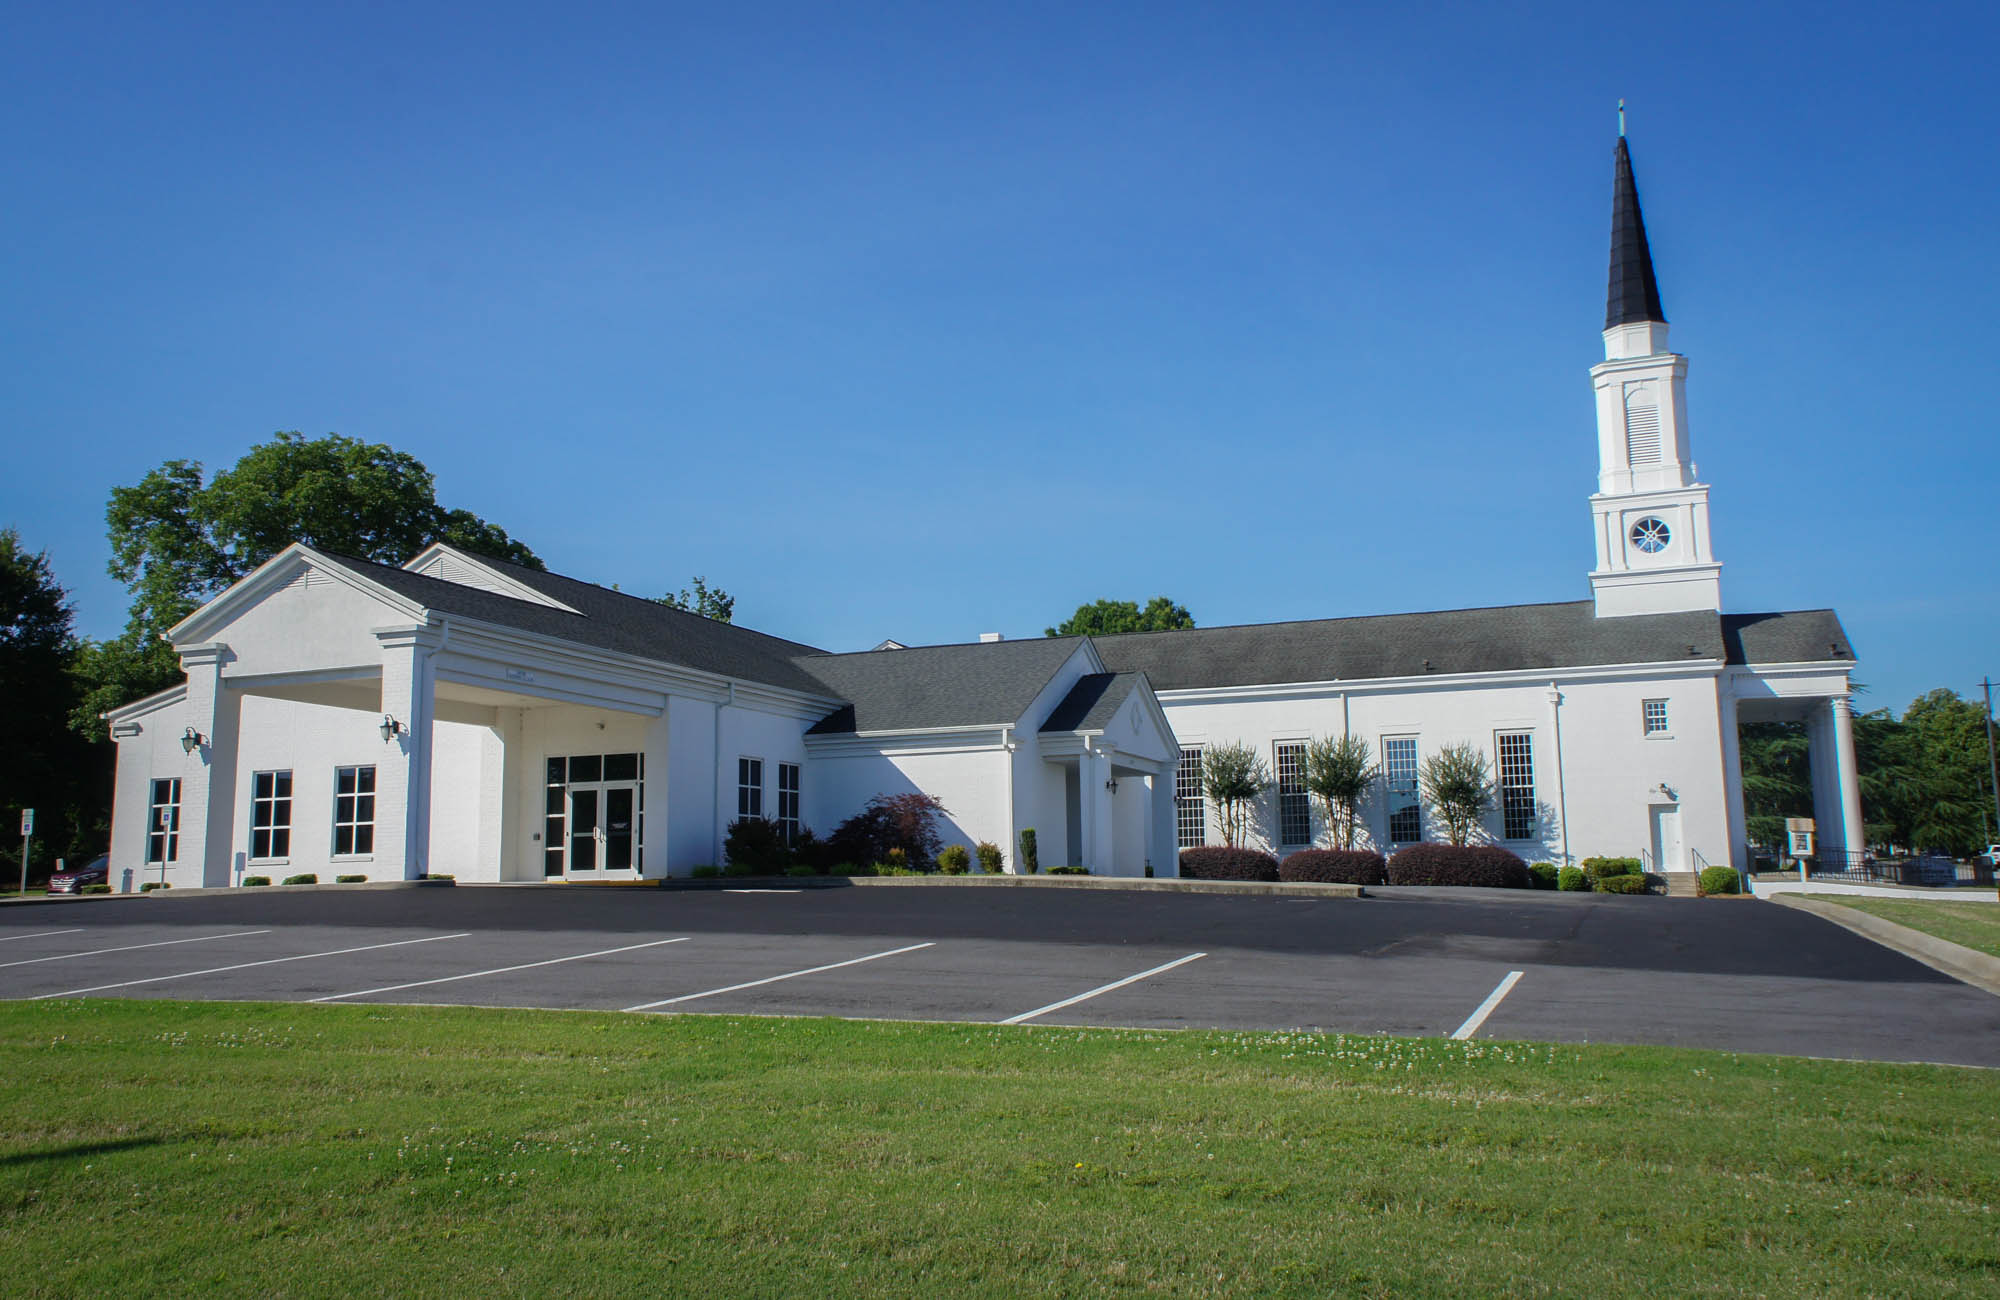 Featured image for “Limestone Presbyterian Church”